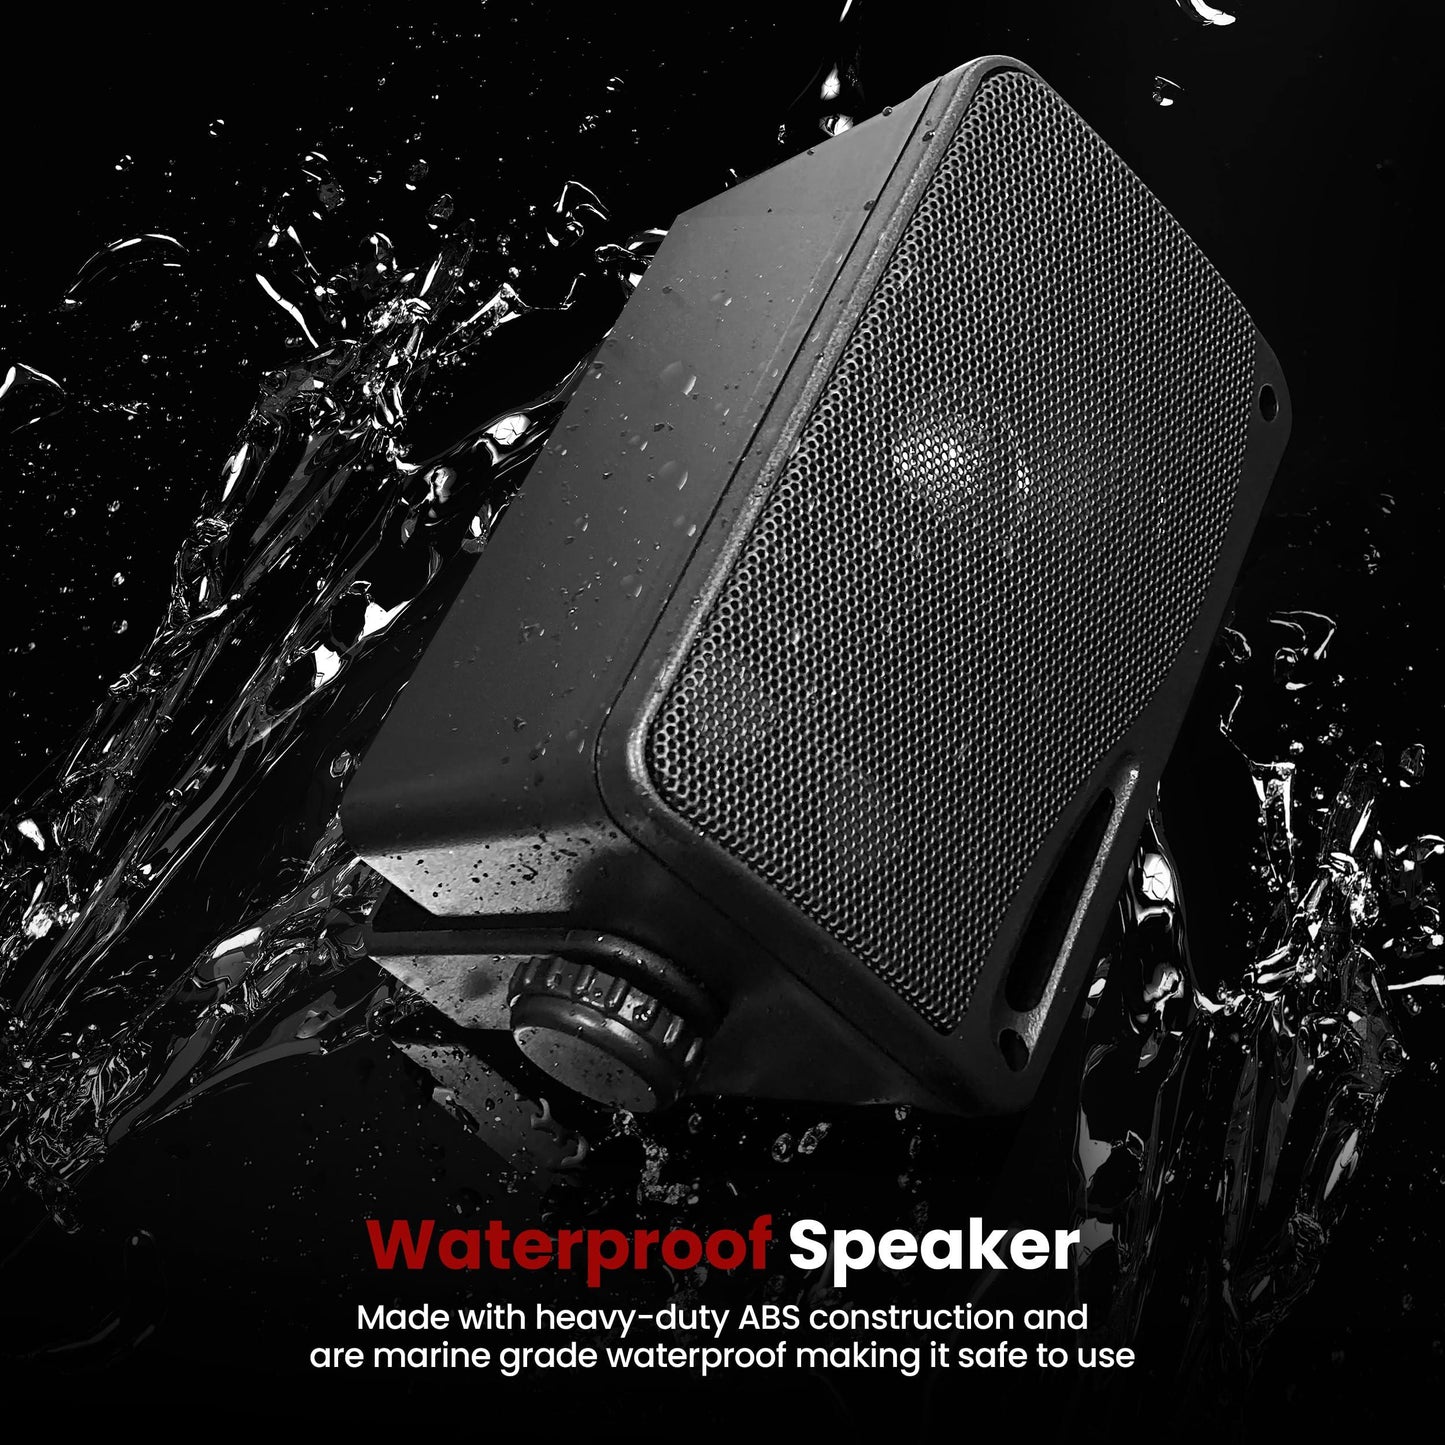 Pyle 3-way Mini Box Speaker System - 3.5 Inch 200 Watt Waterproof Marine Grade Mount Speakers - in a Heavy Duty ABS Enclosure Grill - Home, Boat, Poolside, Patio Indoor Outdoor Use (Black) - CookCave